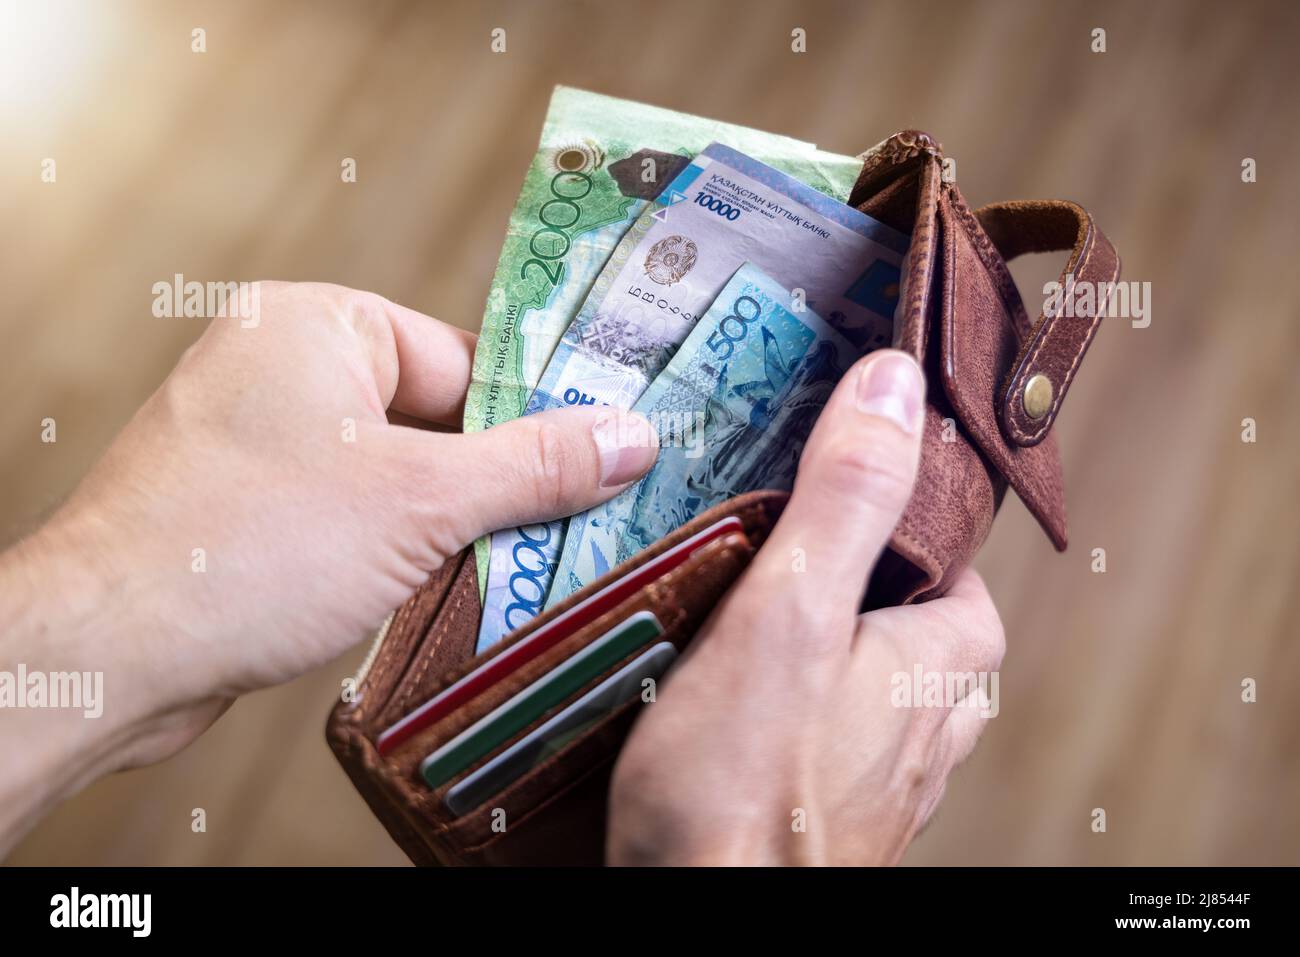 Kazakh Tenge banknotes in a wallet Stock Photo